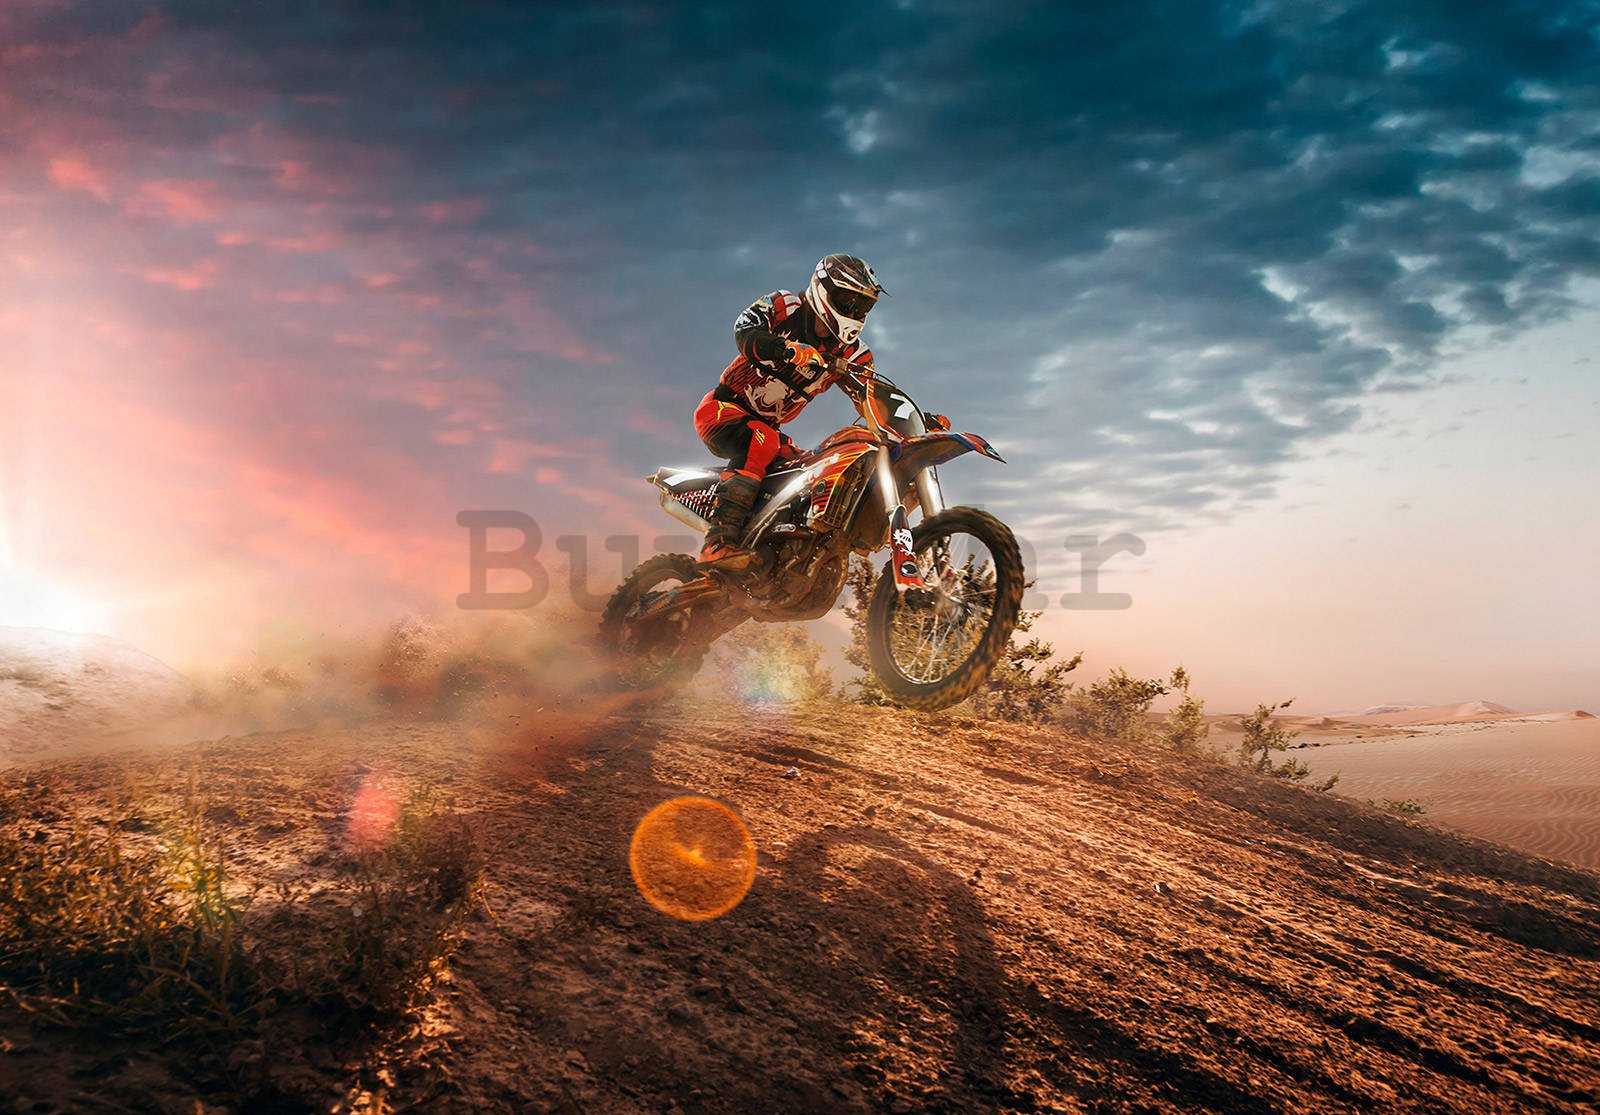 Vlies foto tapeta: Motocross - 416x254 cm